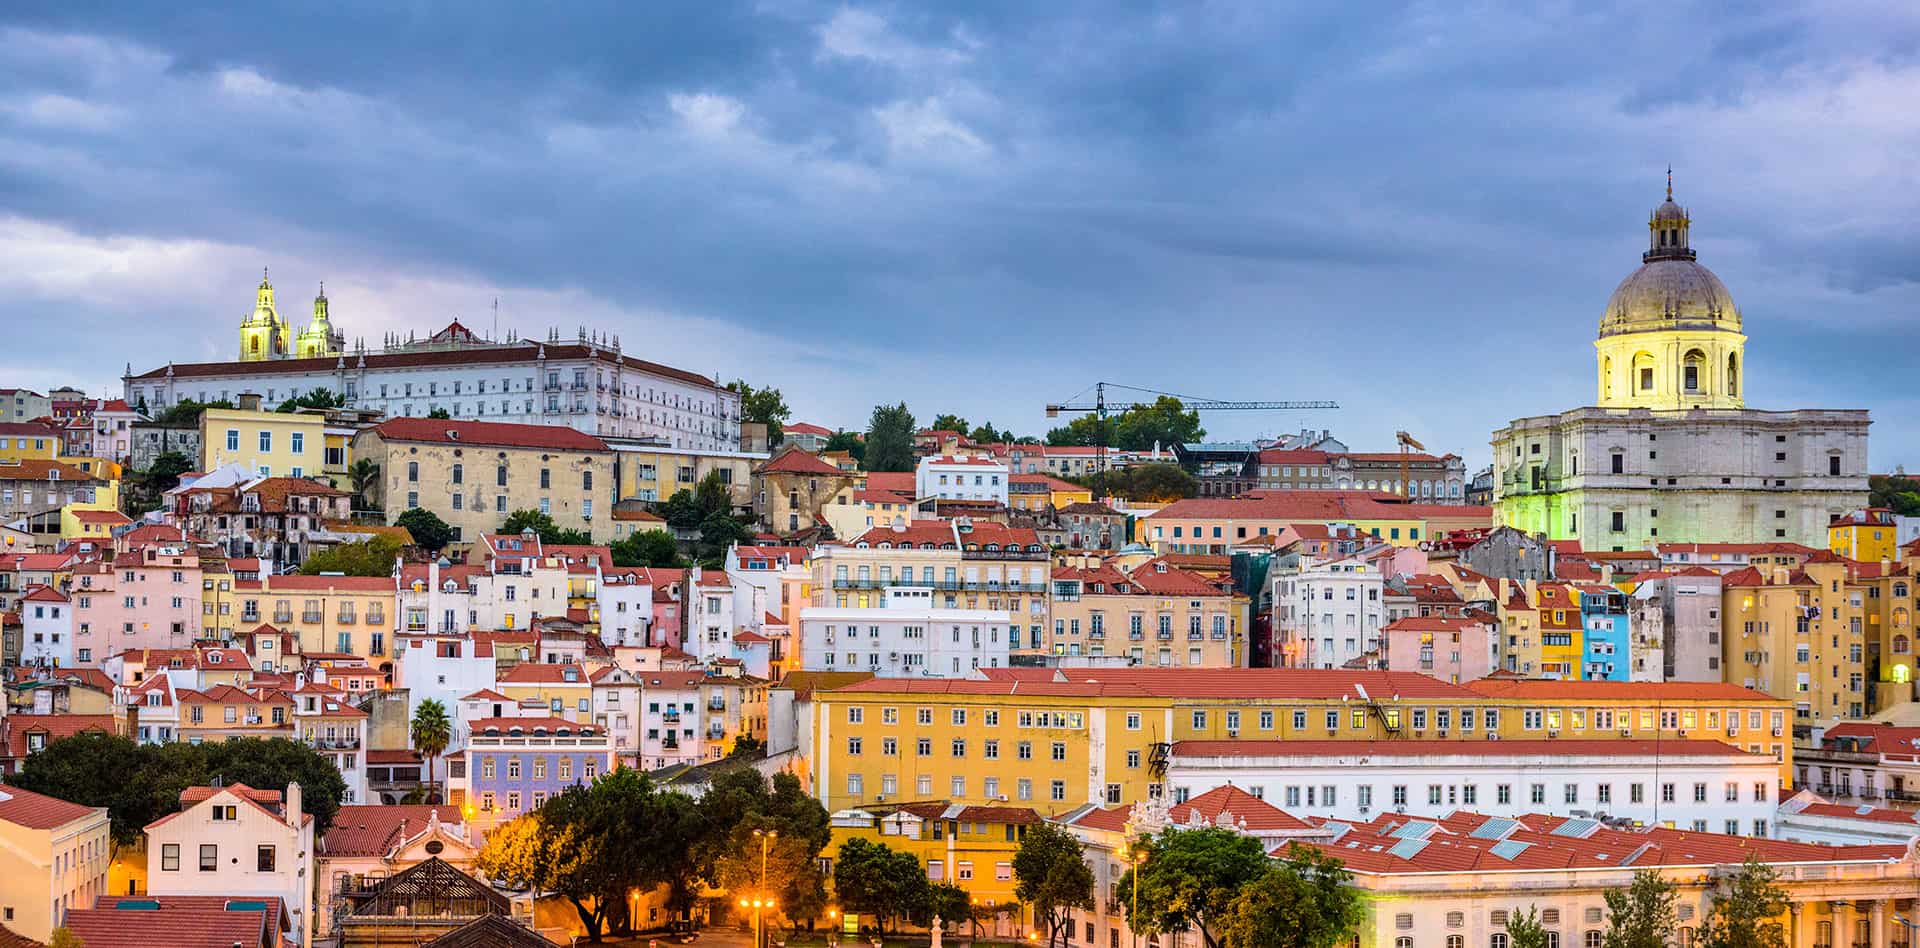 lisbon-portugal-alfama-2021-08-26-18-12-59-utc